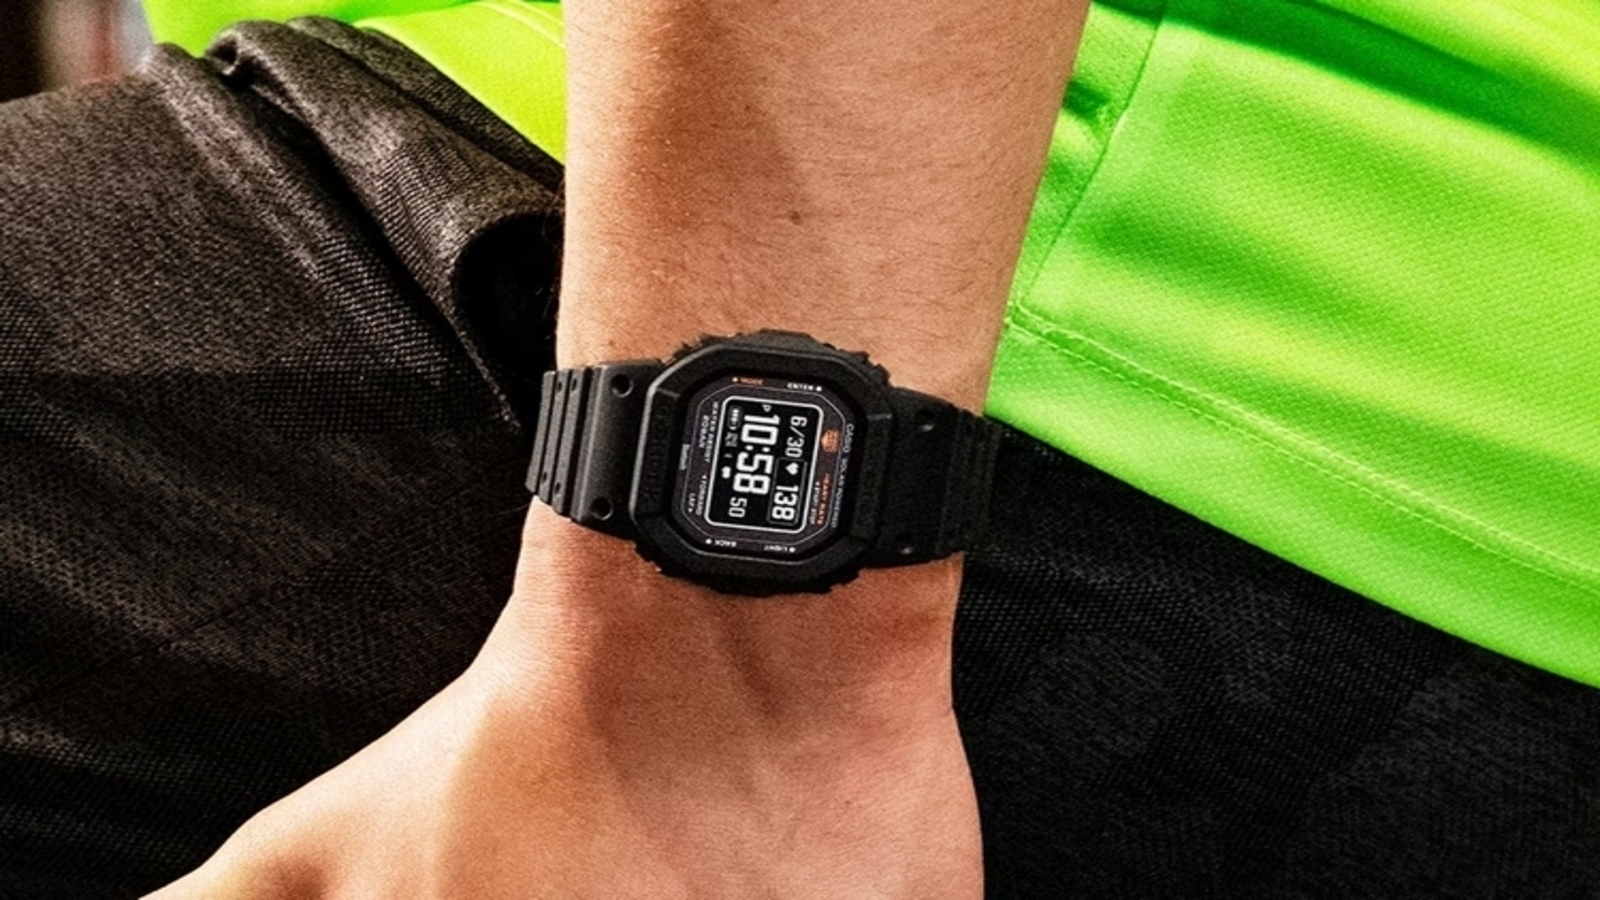 Casio'nun Retro Esintili Akıllı Saati Casio DWH5600 G-Shock’u duyurdu